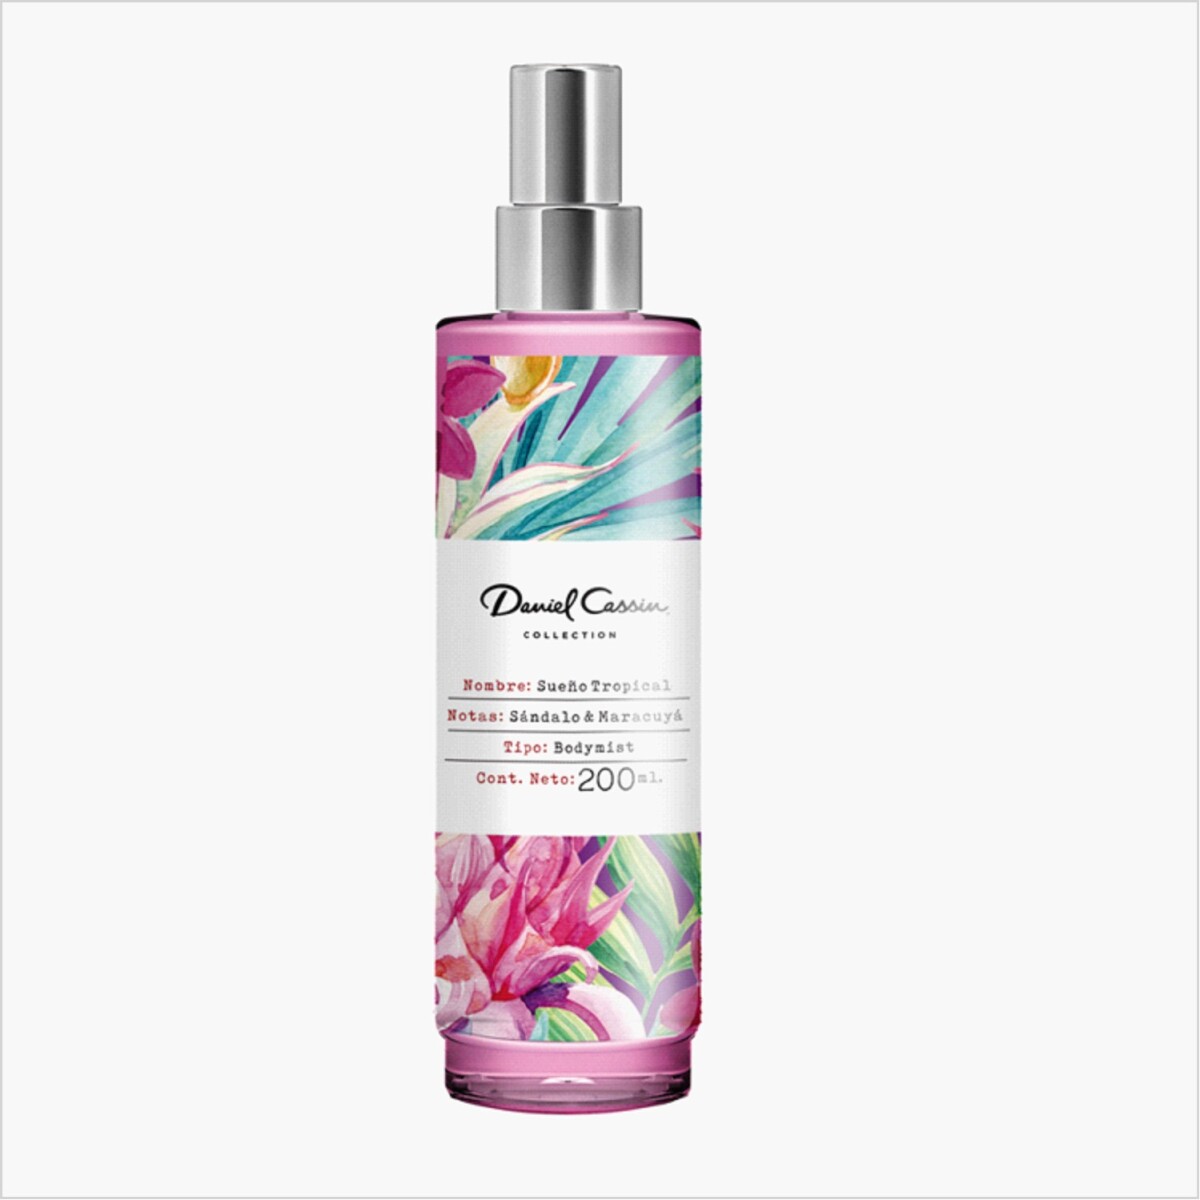 Perfume Daniel Cassin SueÃ£â€˜O Tropical Bodymist 200 ml 